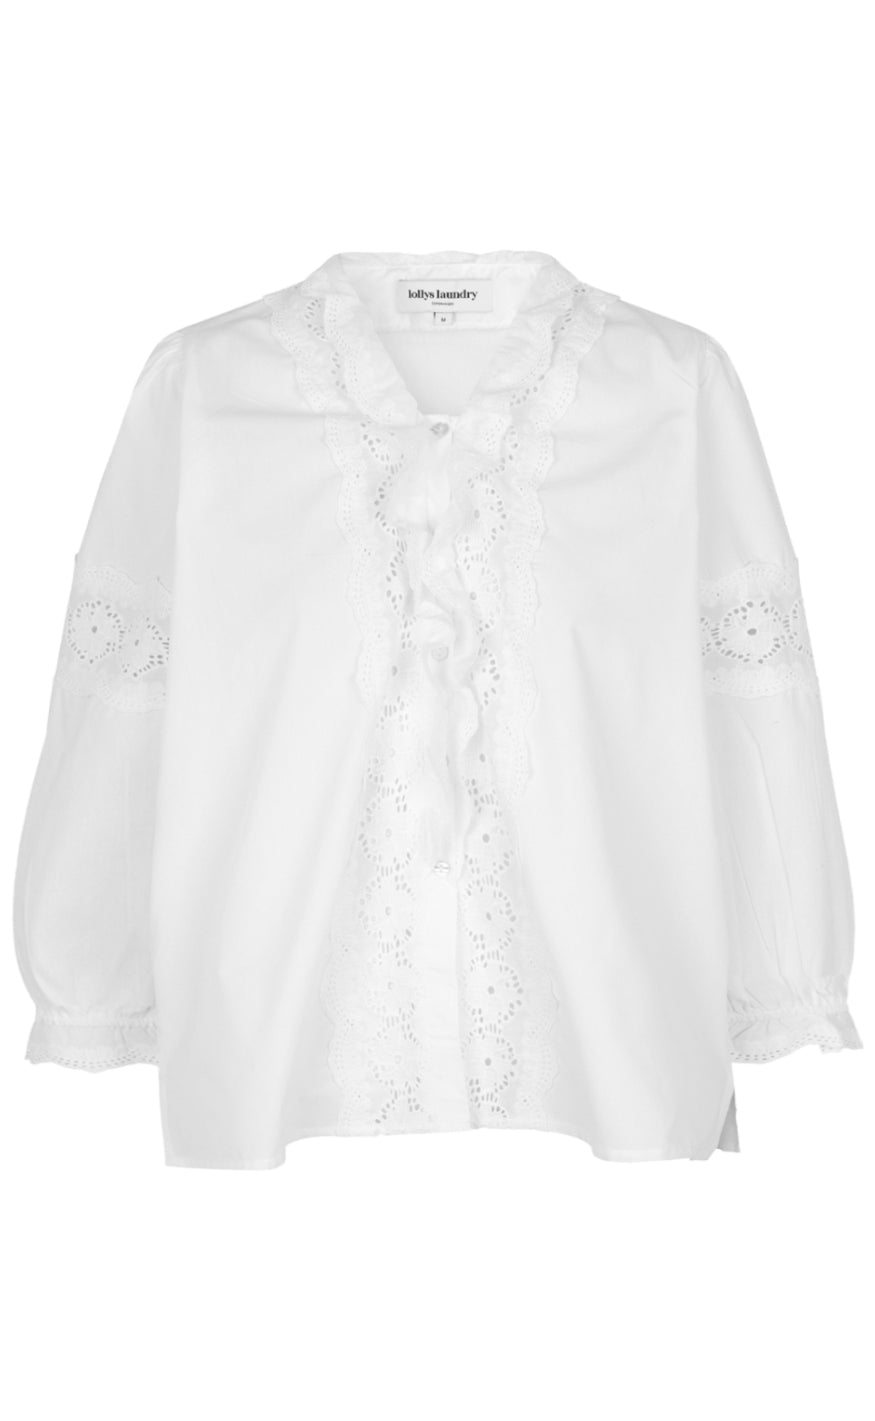 16: Lollys Laundry Skjorte - Pavia - White